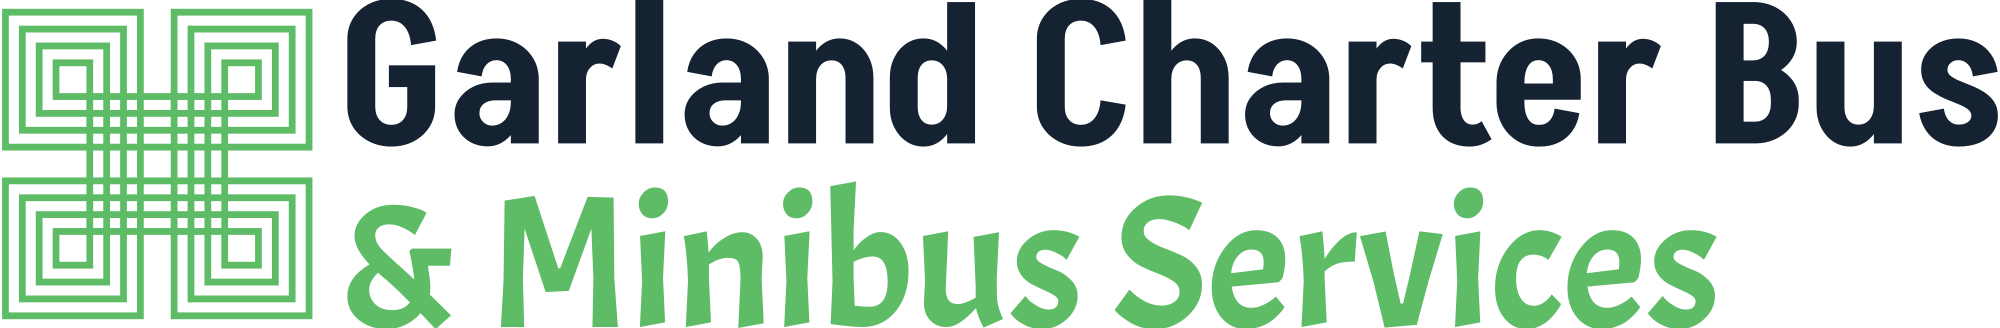 Charter Bus Company Sugar Land logo